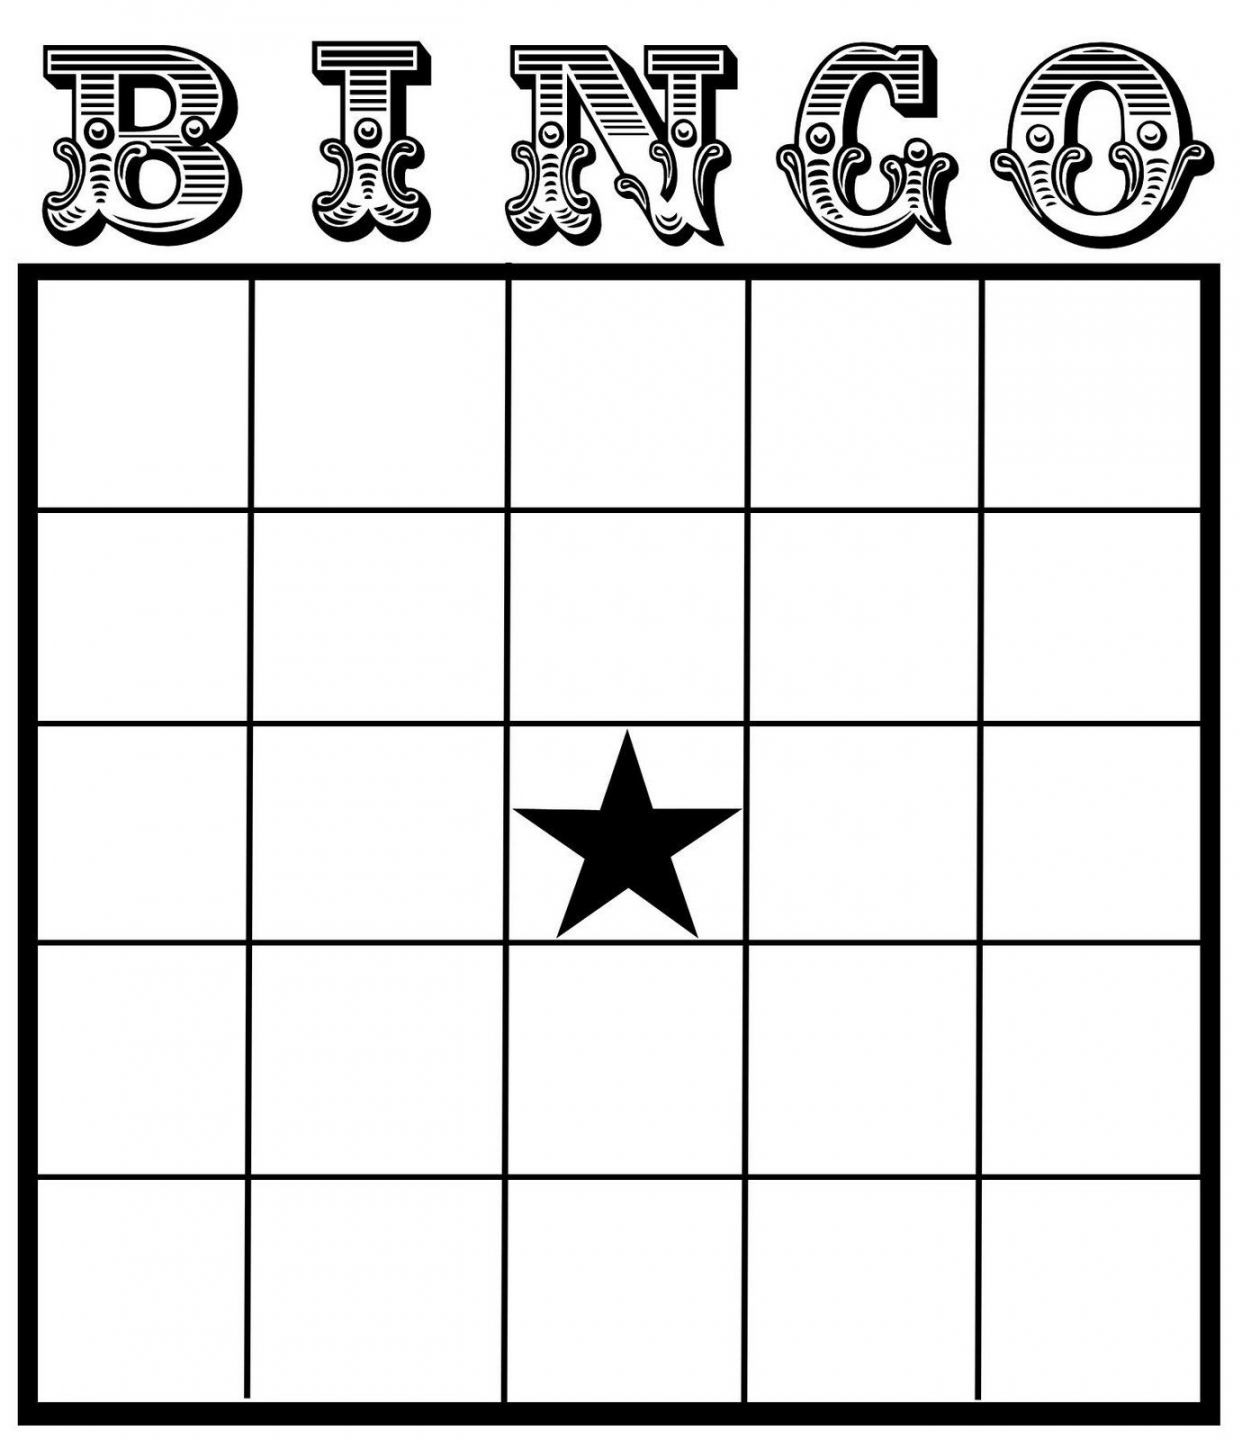 Free Blank Bingo Cards Printable - Printable - Let